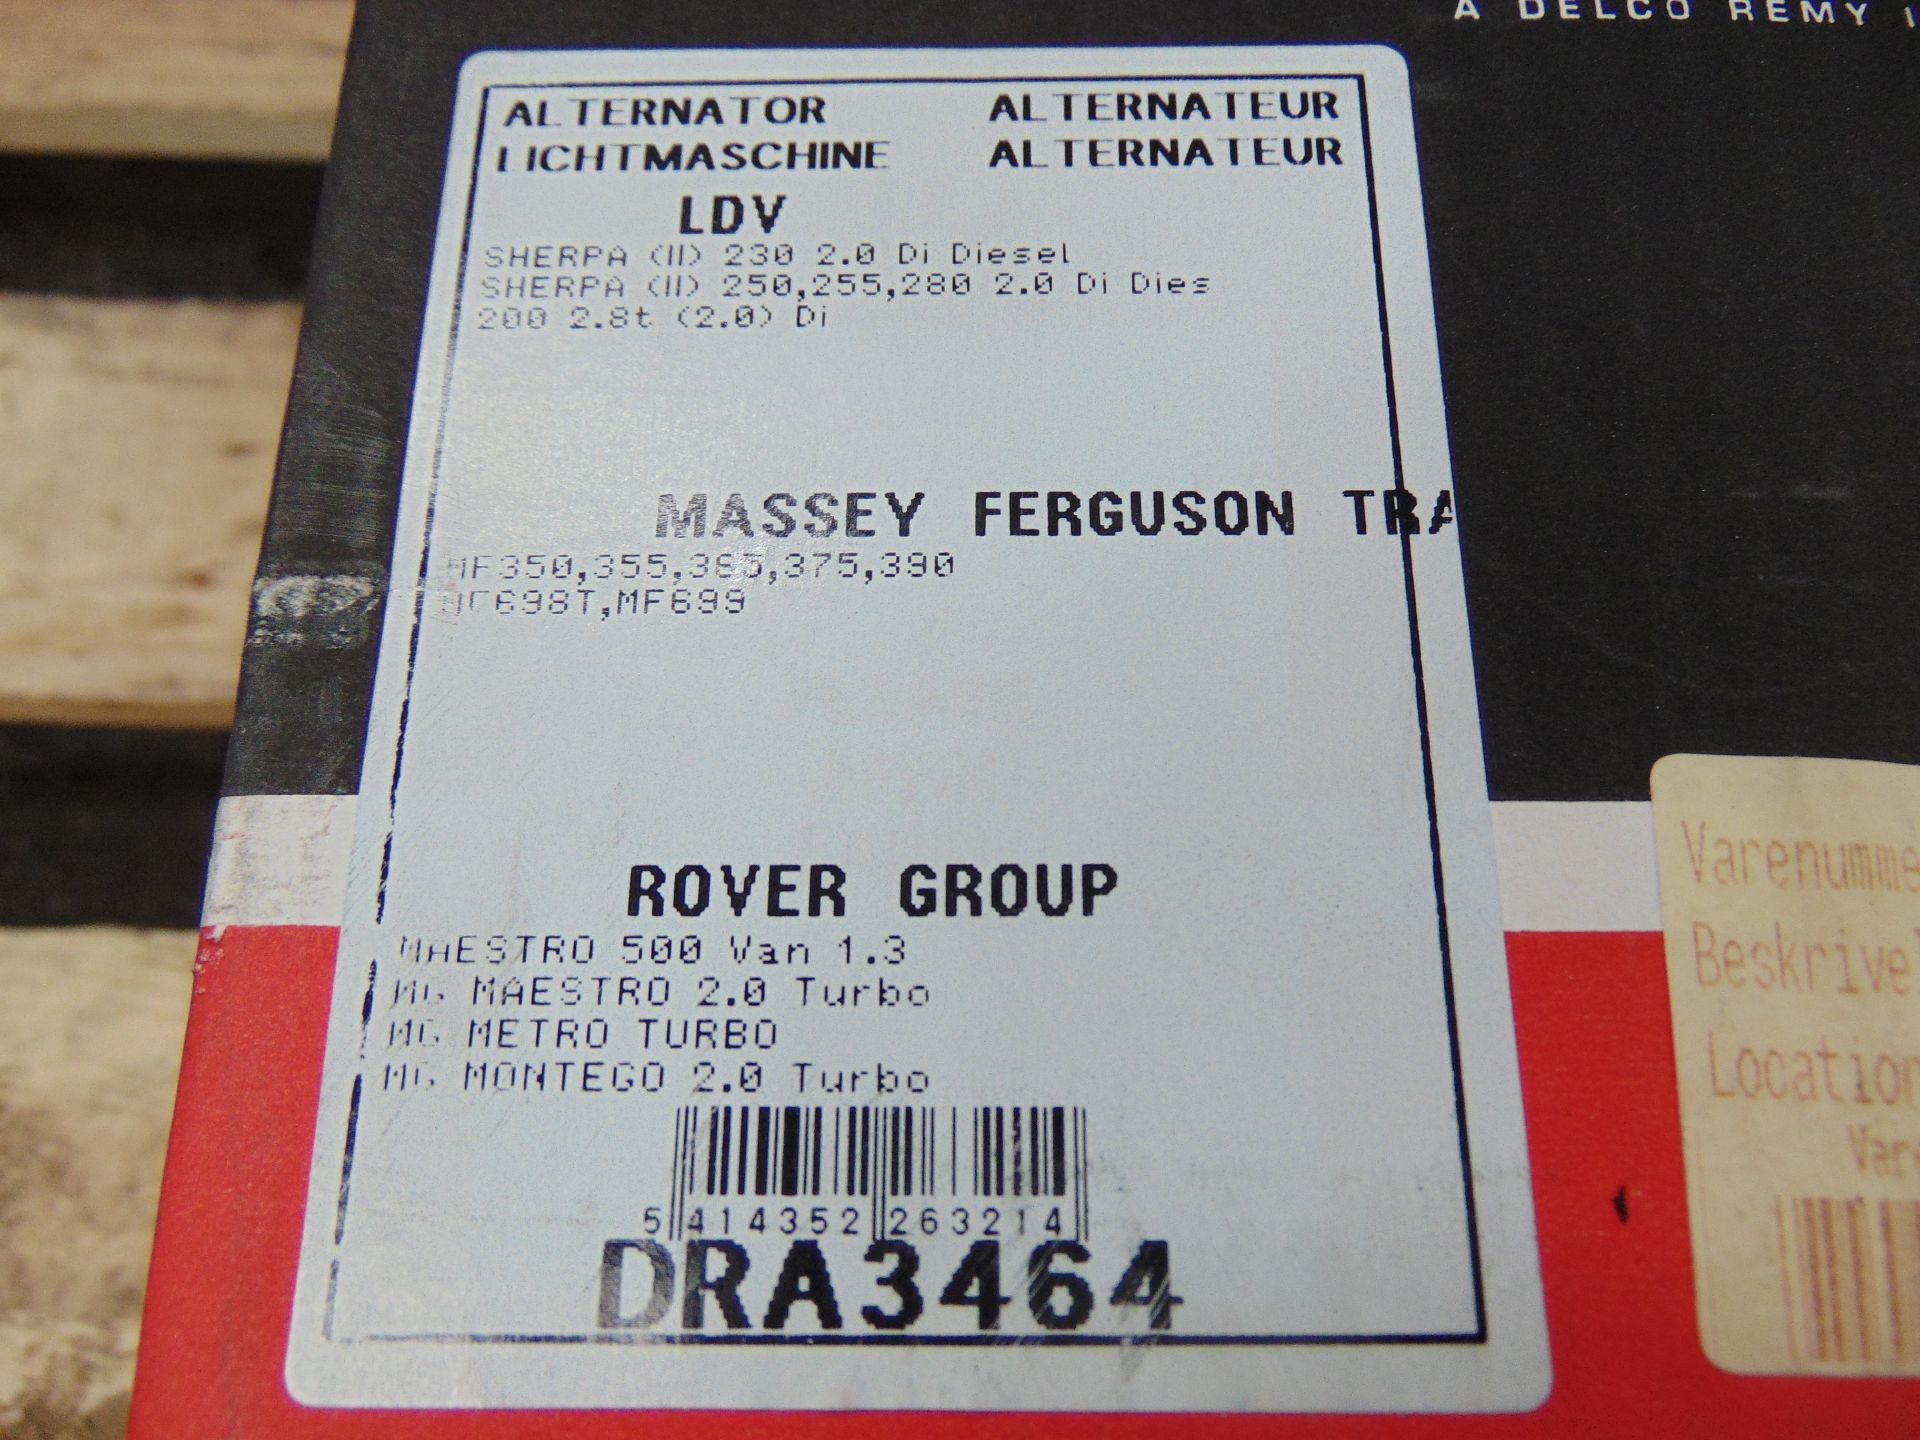 6 x Massey Ferguson / Rover Group Delco Remy DRA3464 Alternators - Image 6 of 6